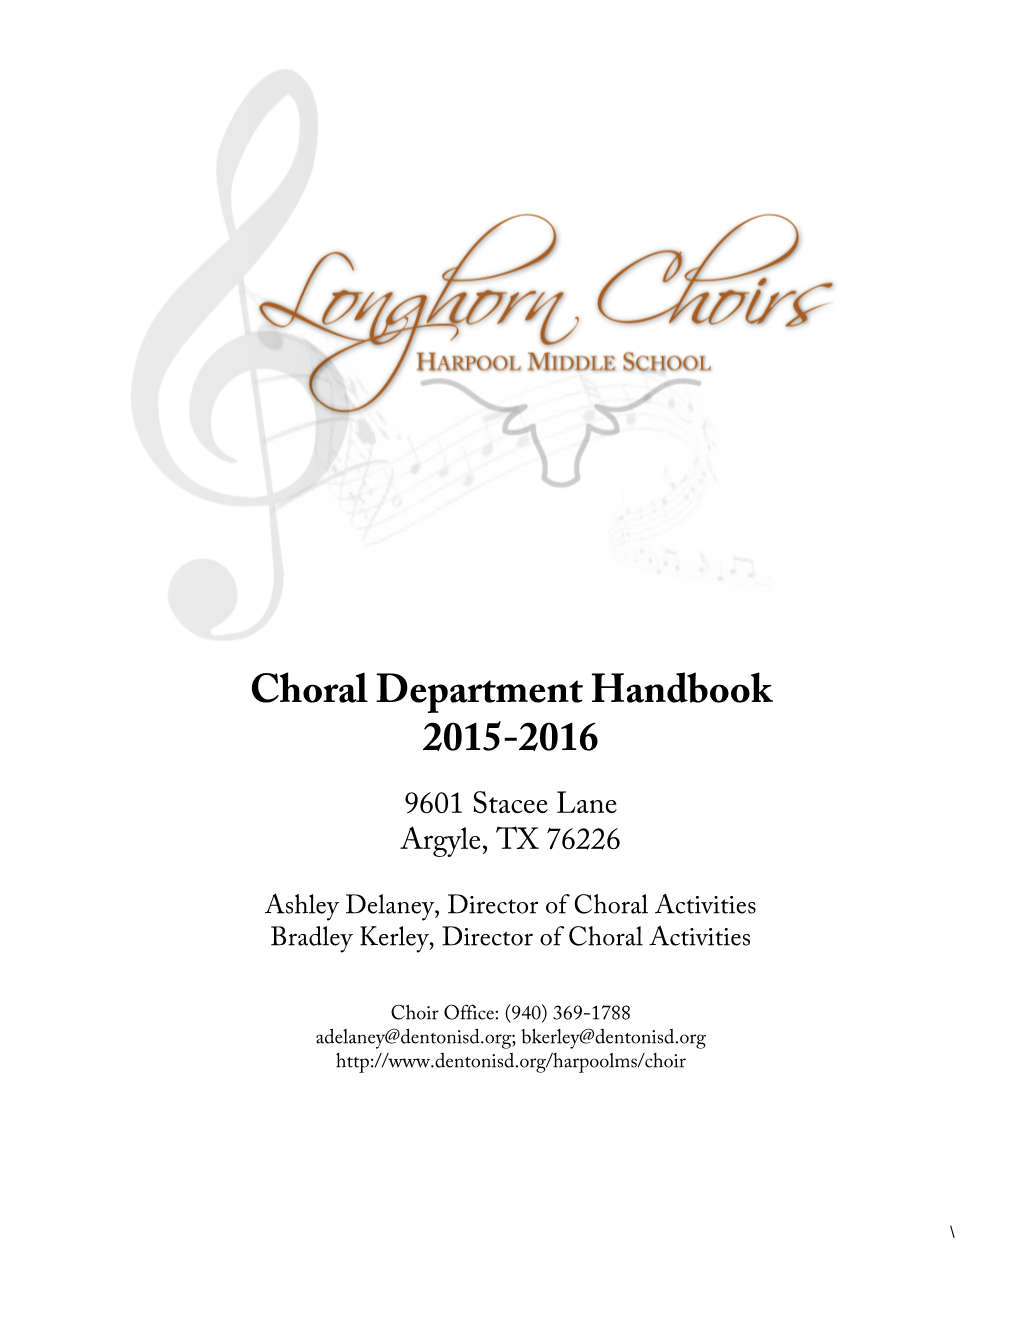 Harpool Middle School Choral Department Handbook